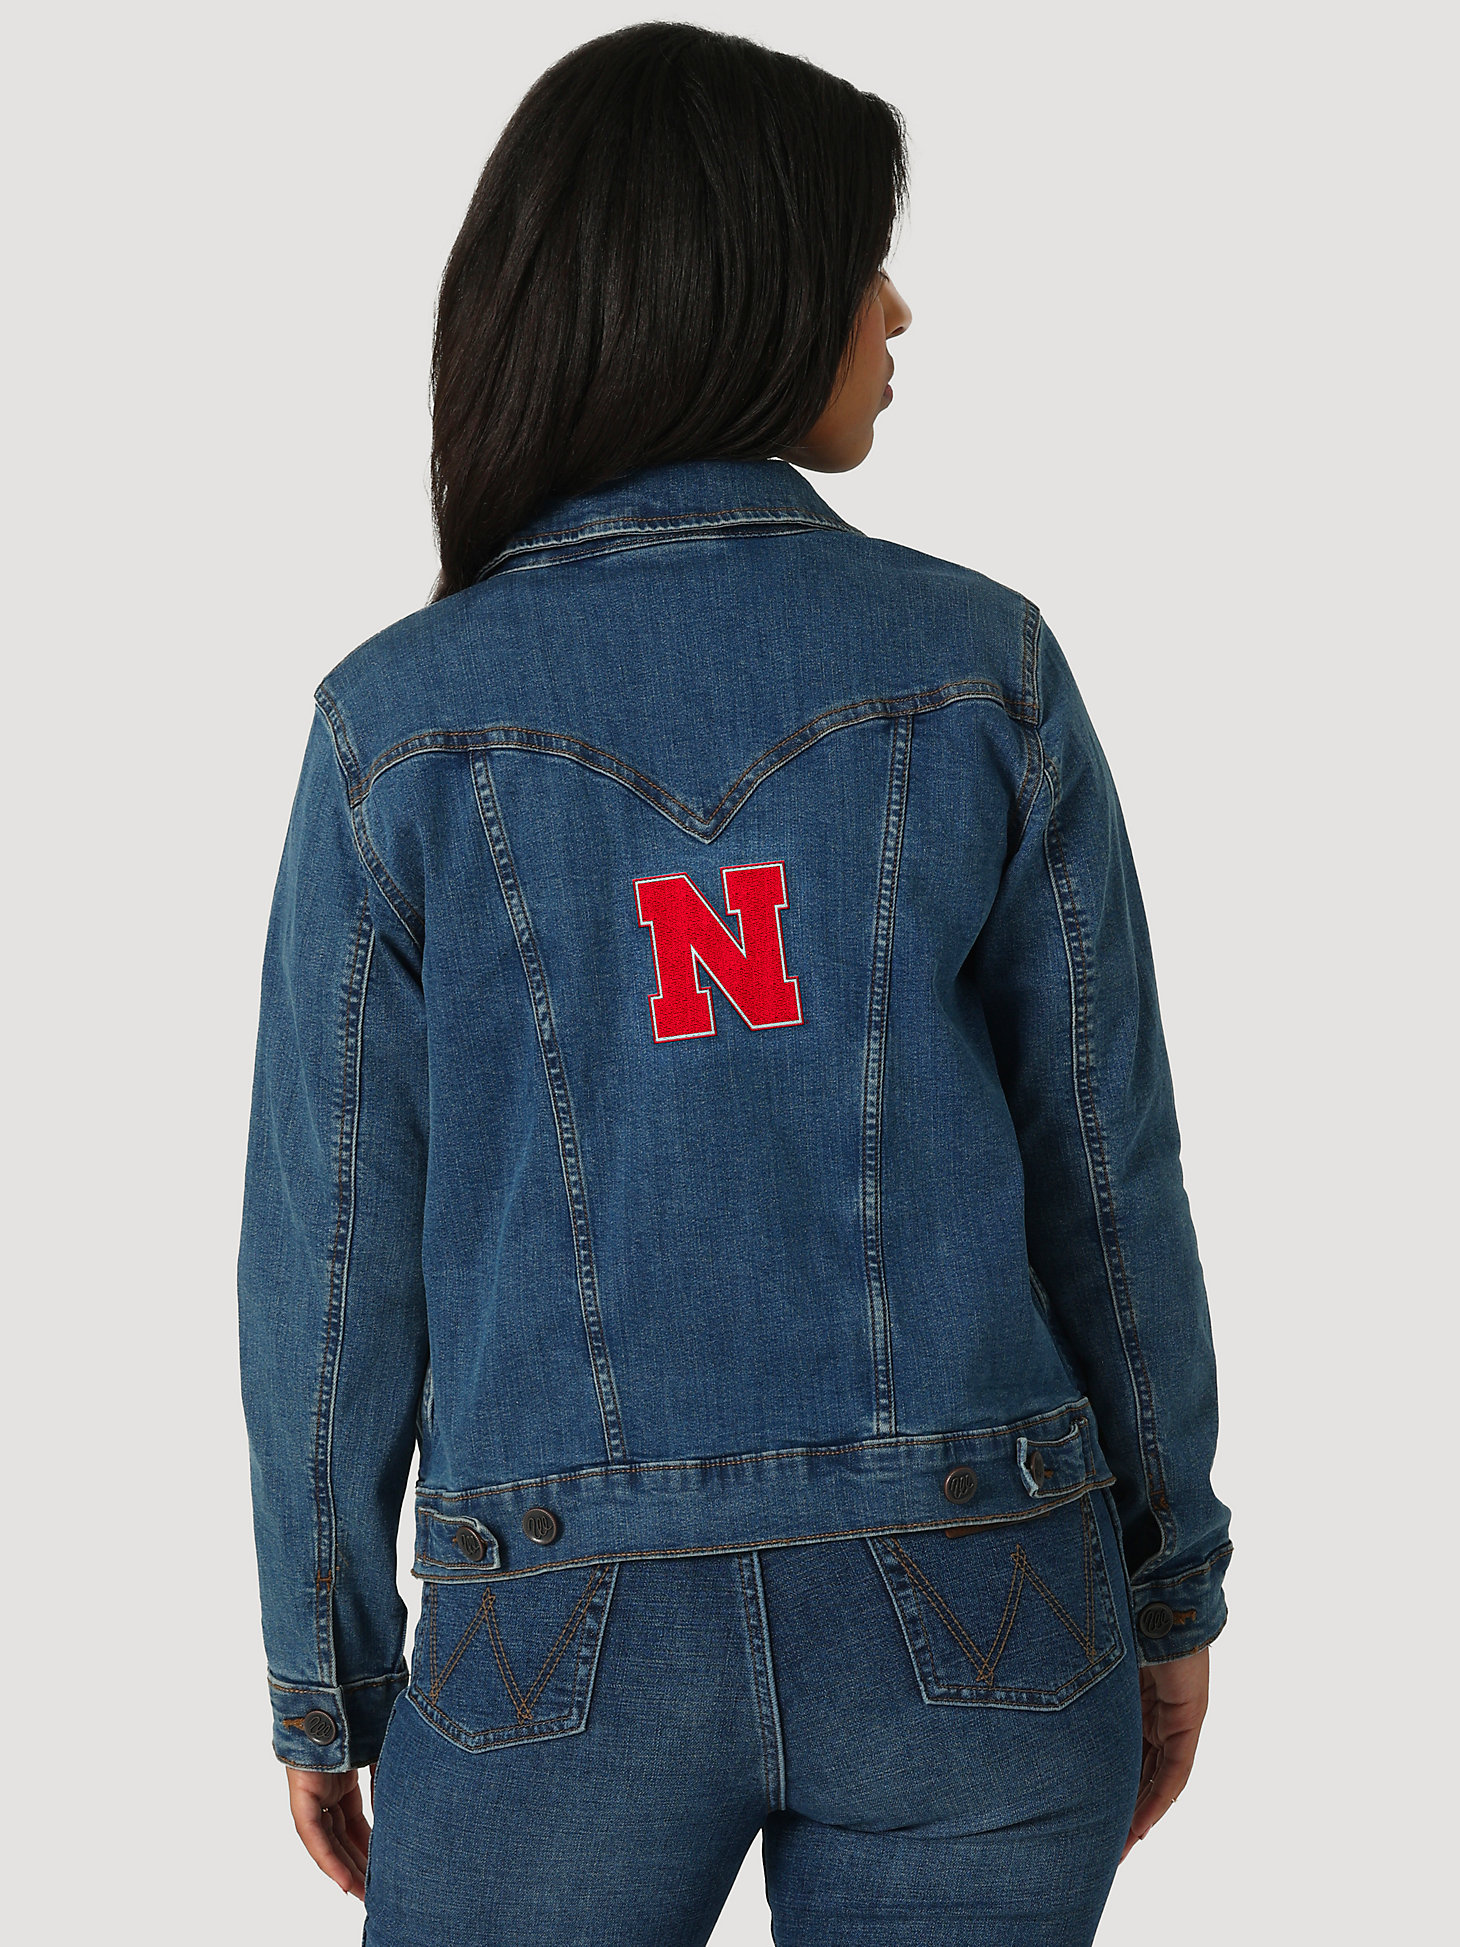 Women's Wrangler Collegiate Embroidered Classic Fit Denim Jacket in University of Nebraska alternative view 1